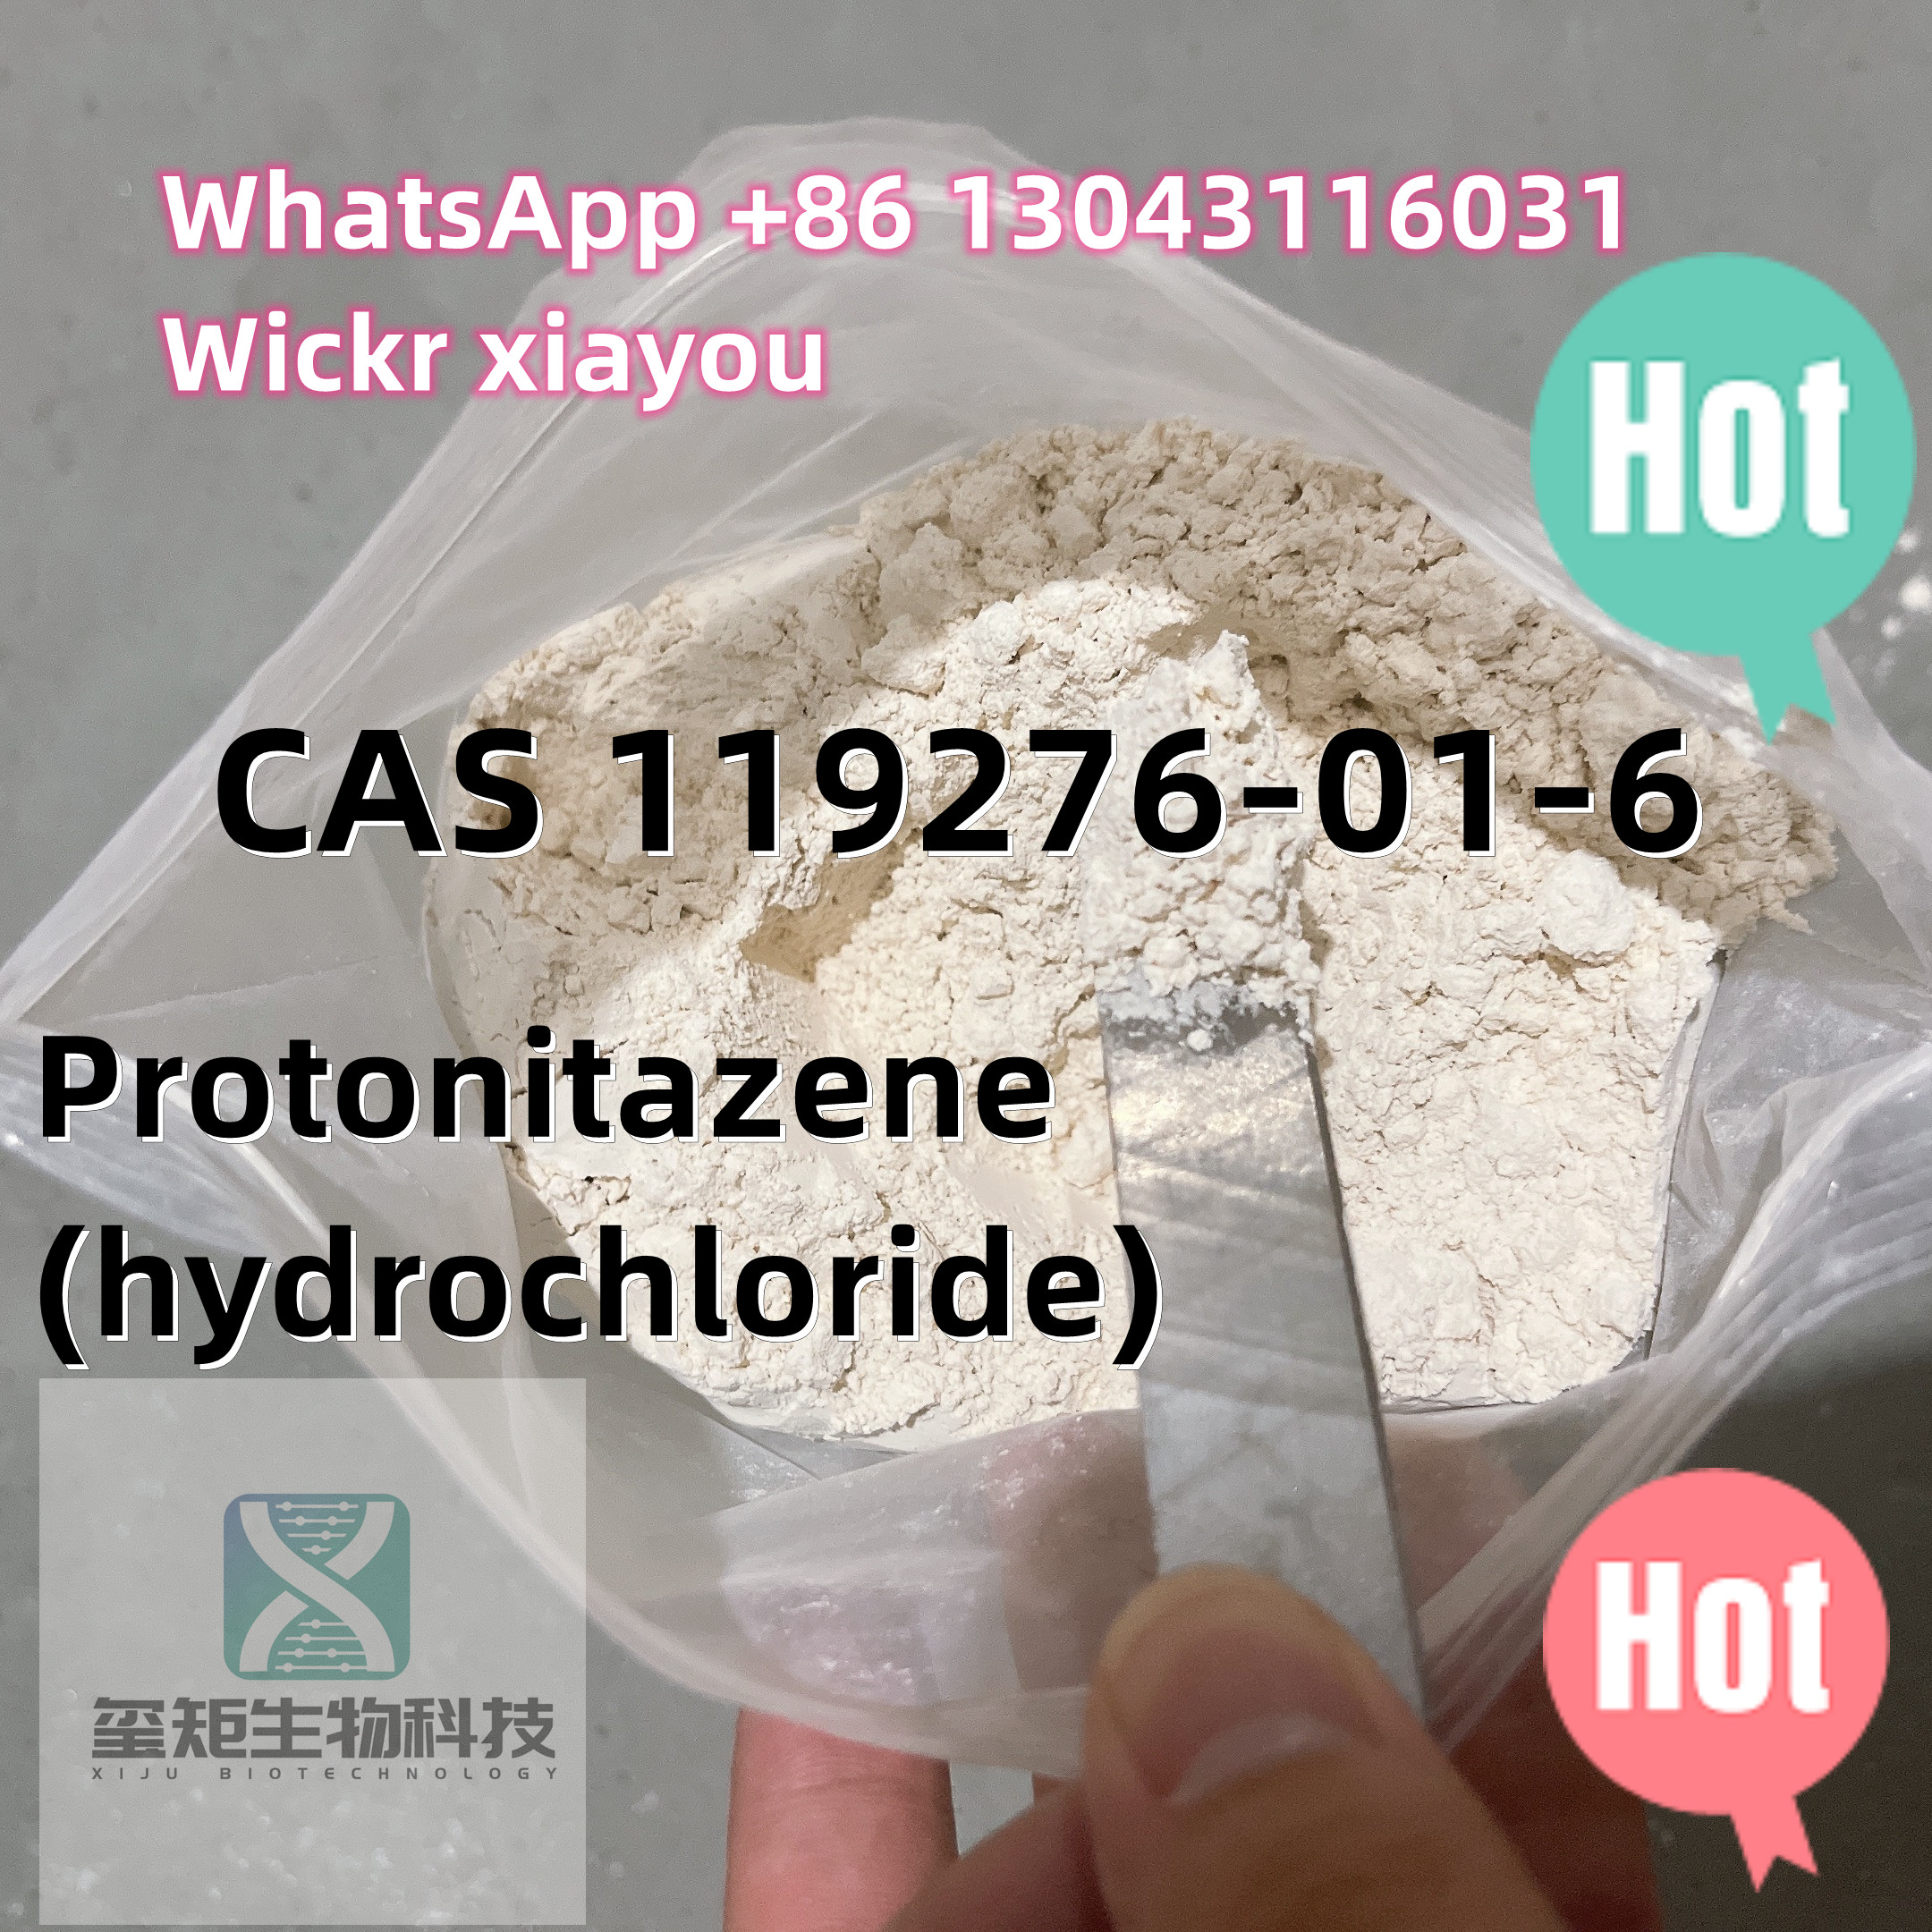 Top Quality 99% Purity Powder Protonitazene-hydrochloride CAS 119276-01-6 ,Threema: 9JPV7VEE, Wickr ME：xiayou